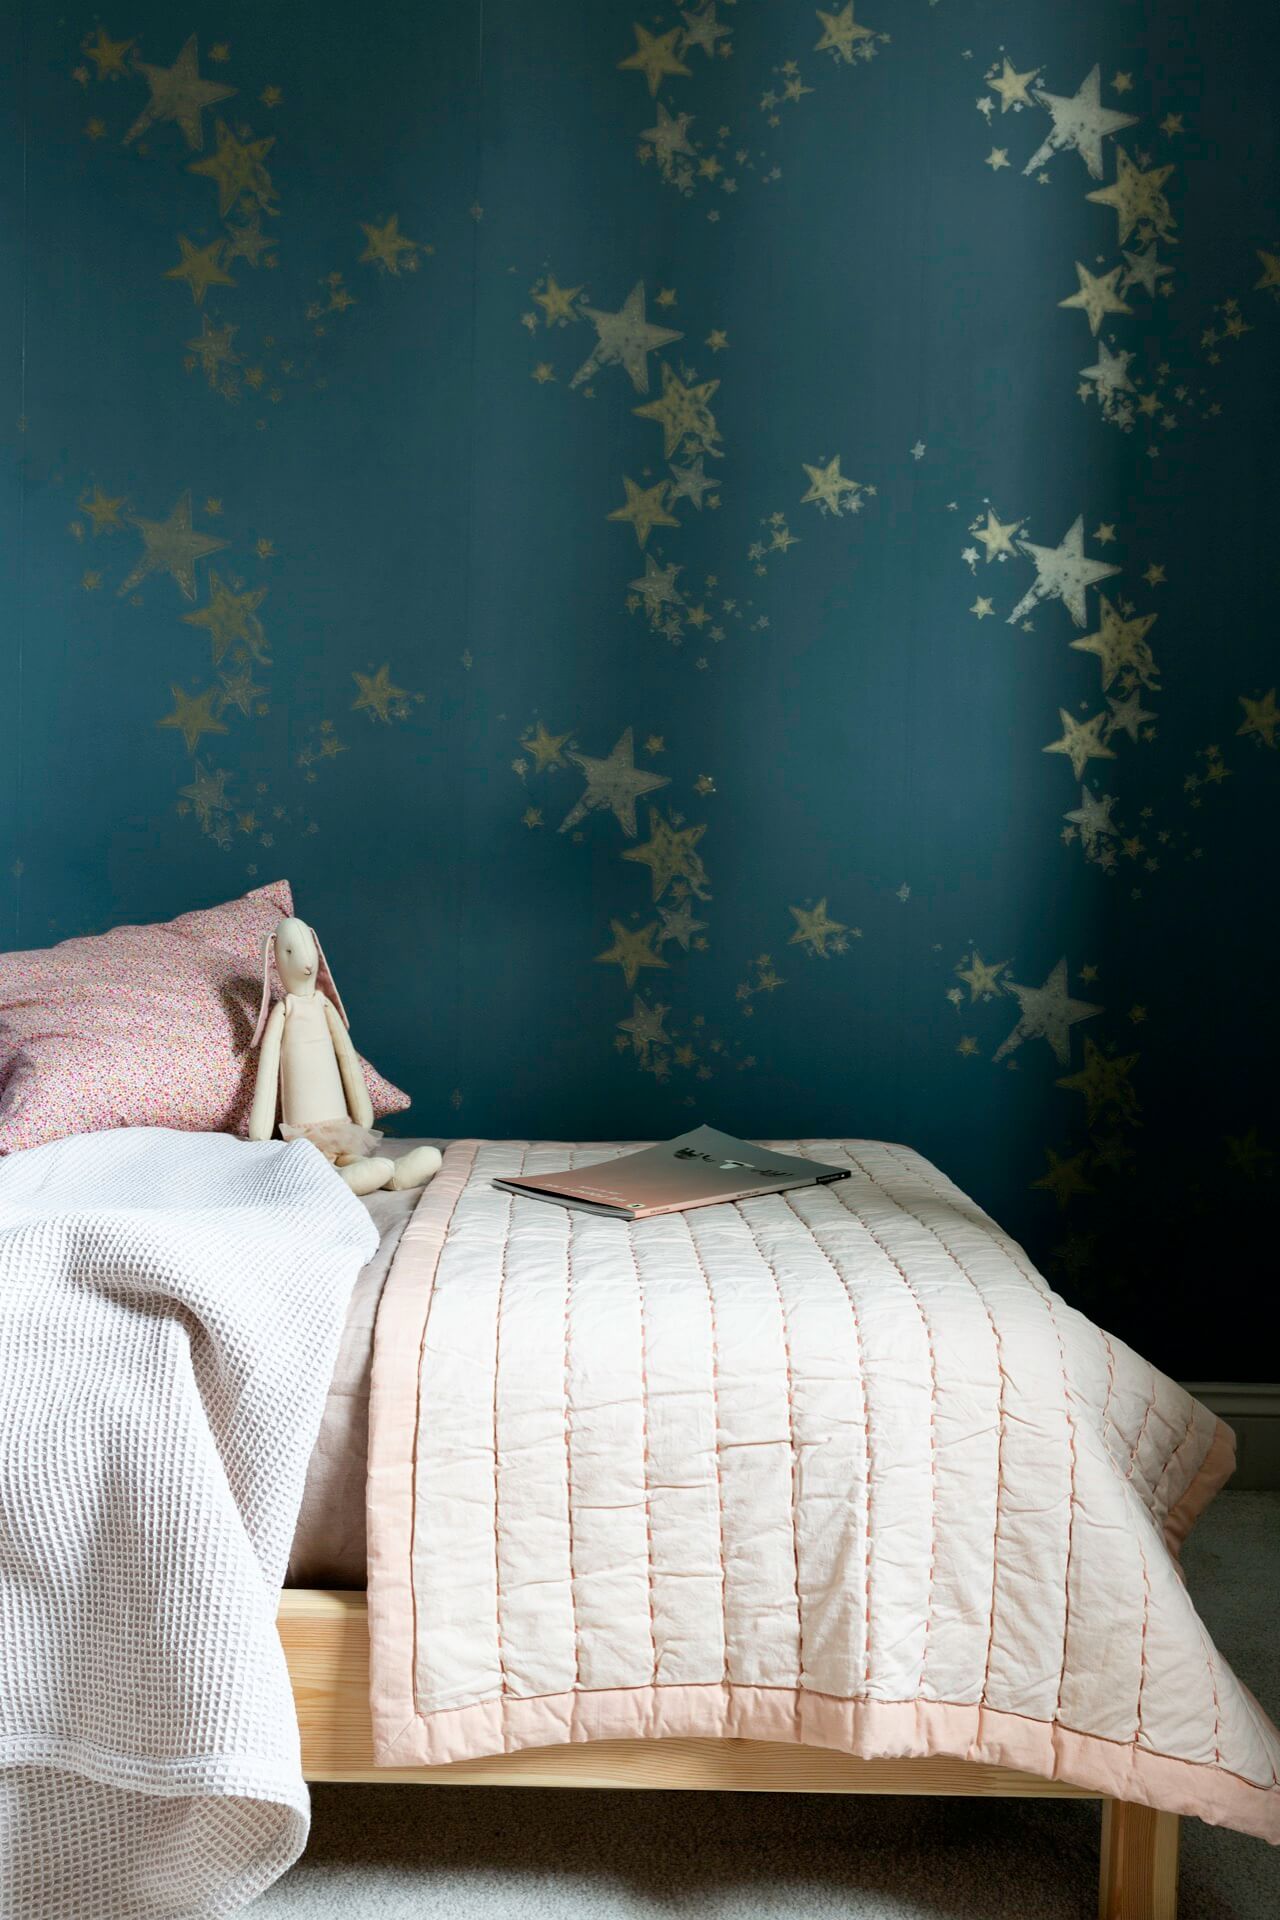 Childs bedroom with dark starry wallpaper